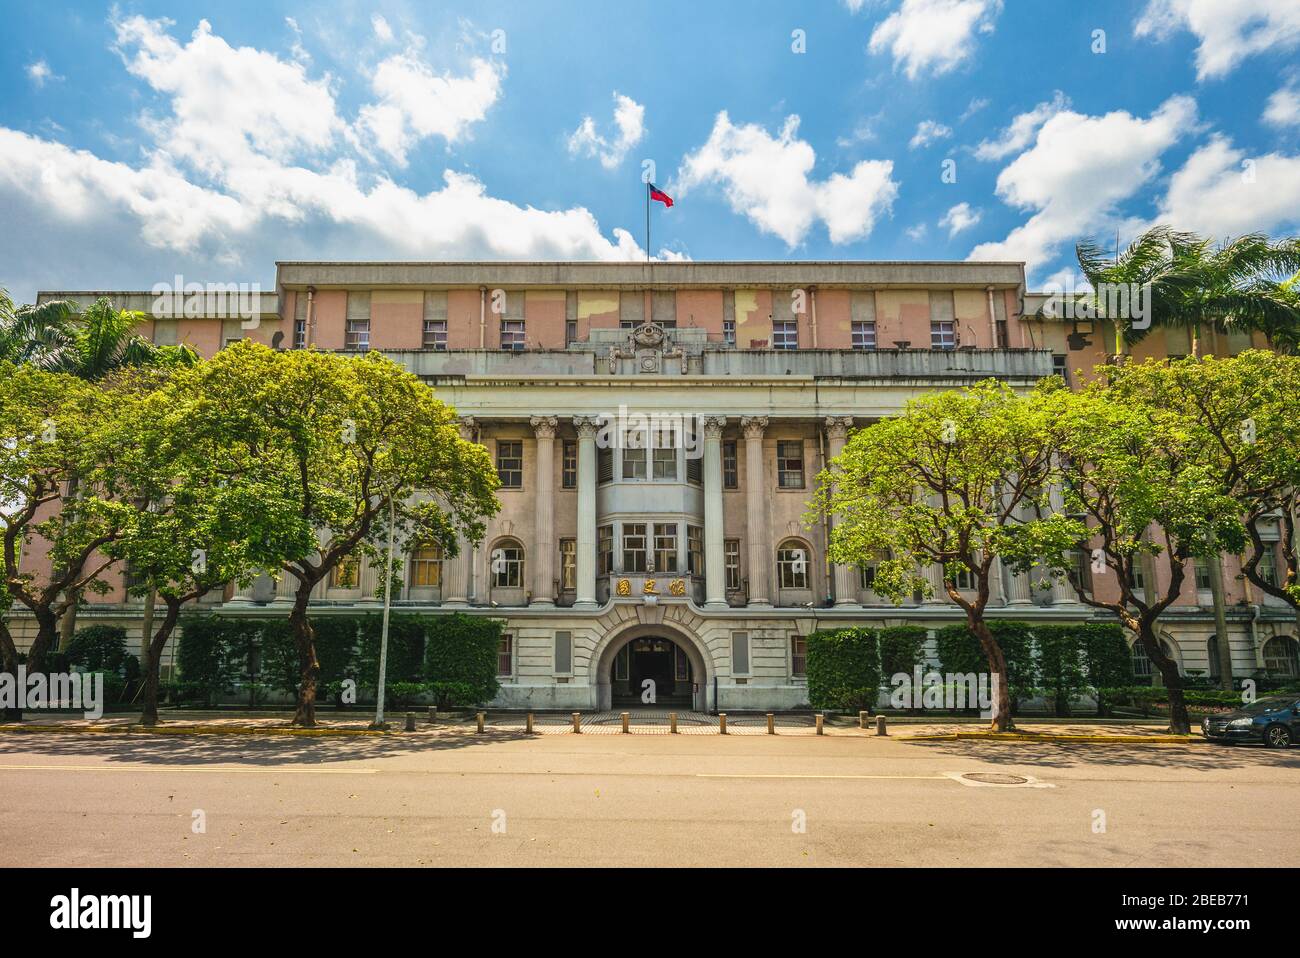 Facade of Academia Historica in Taipei, Taiwan Stock Photo